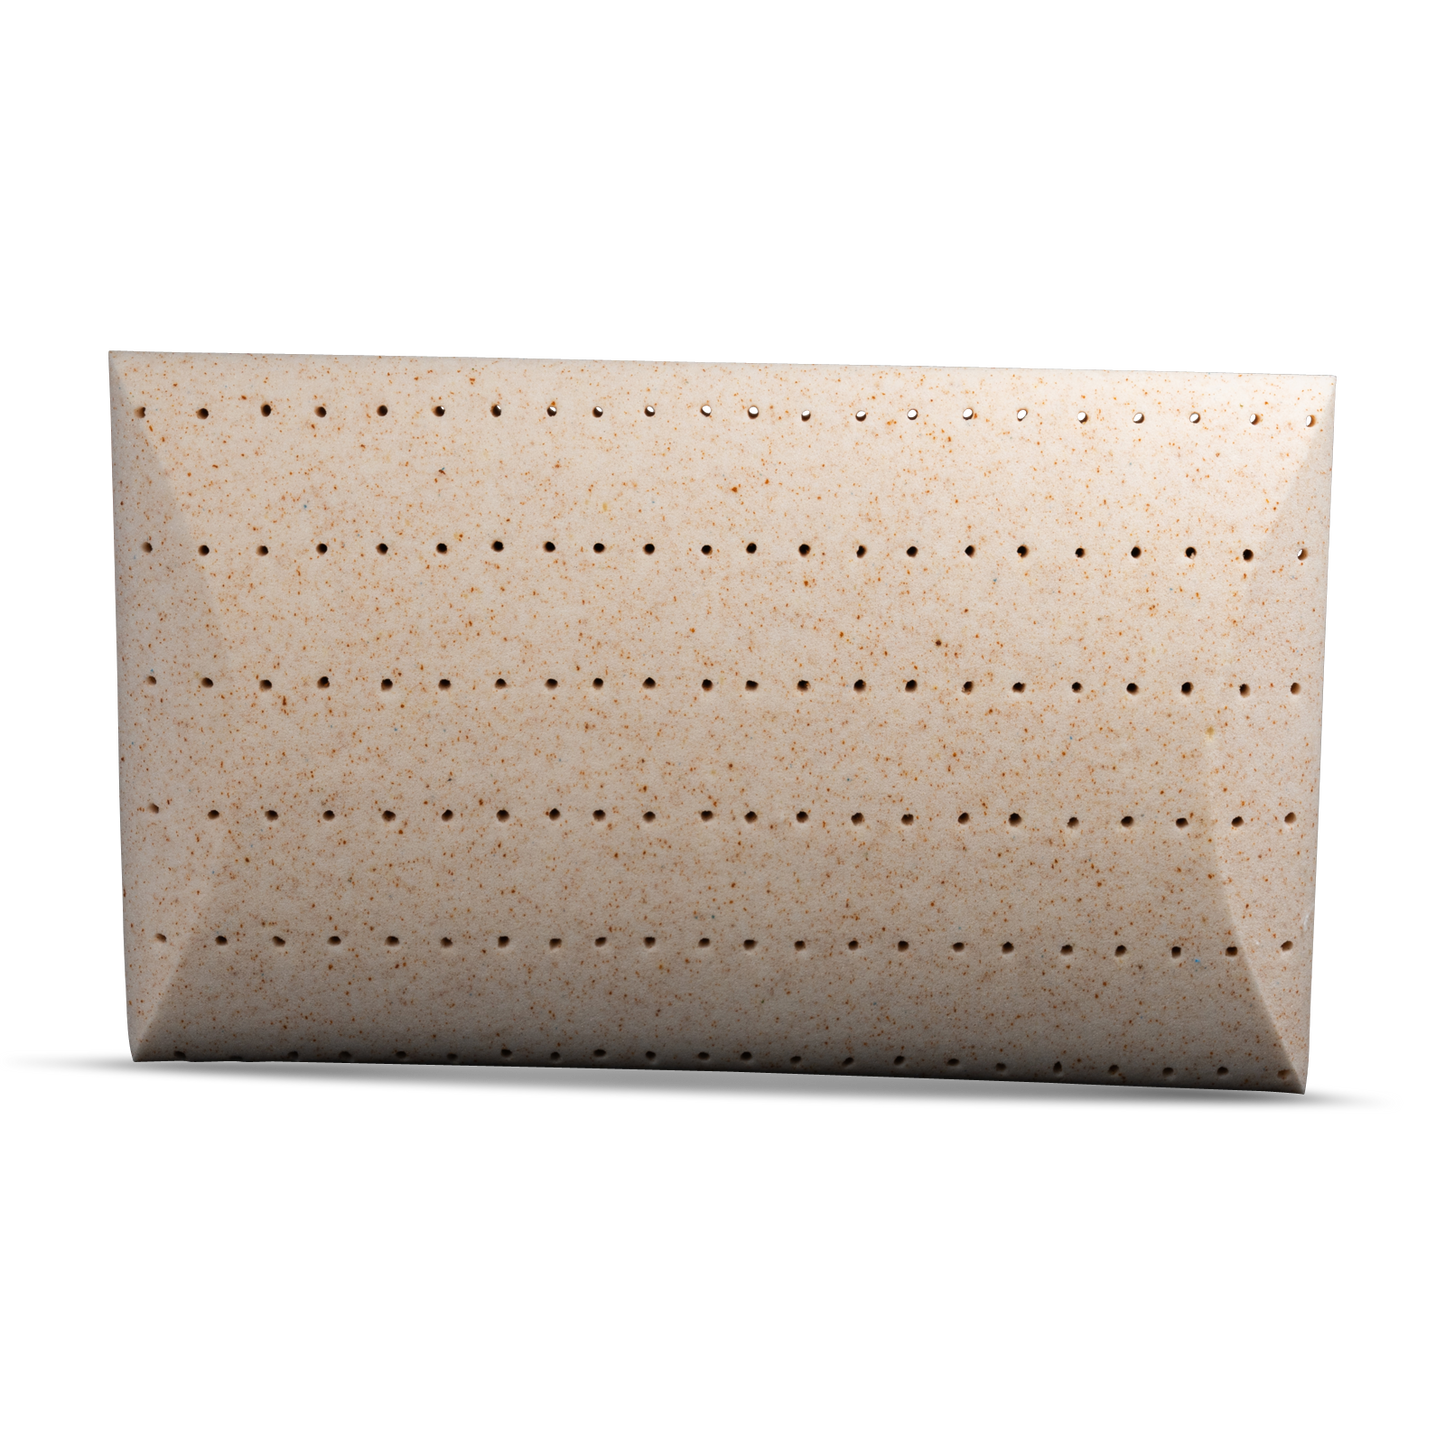 SleepWell Pillow - Classic Shape Copper Gel Memory Foam Pillow